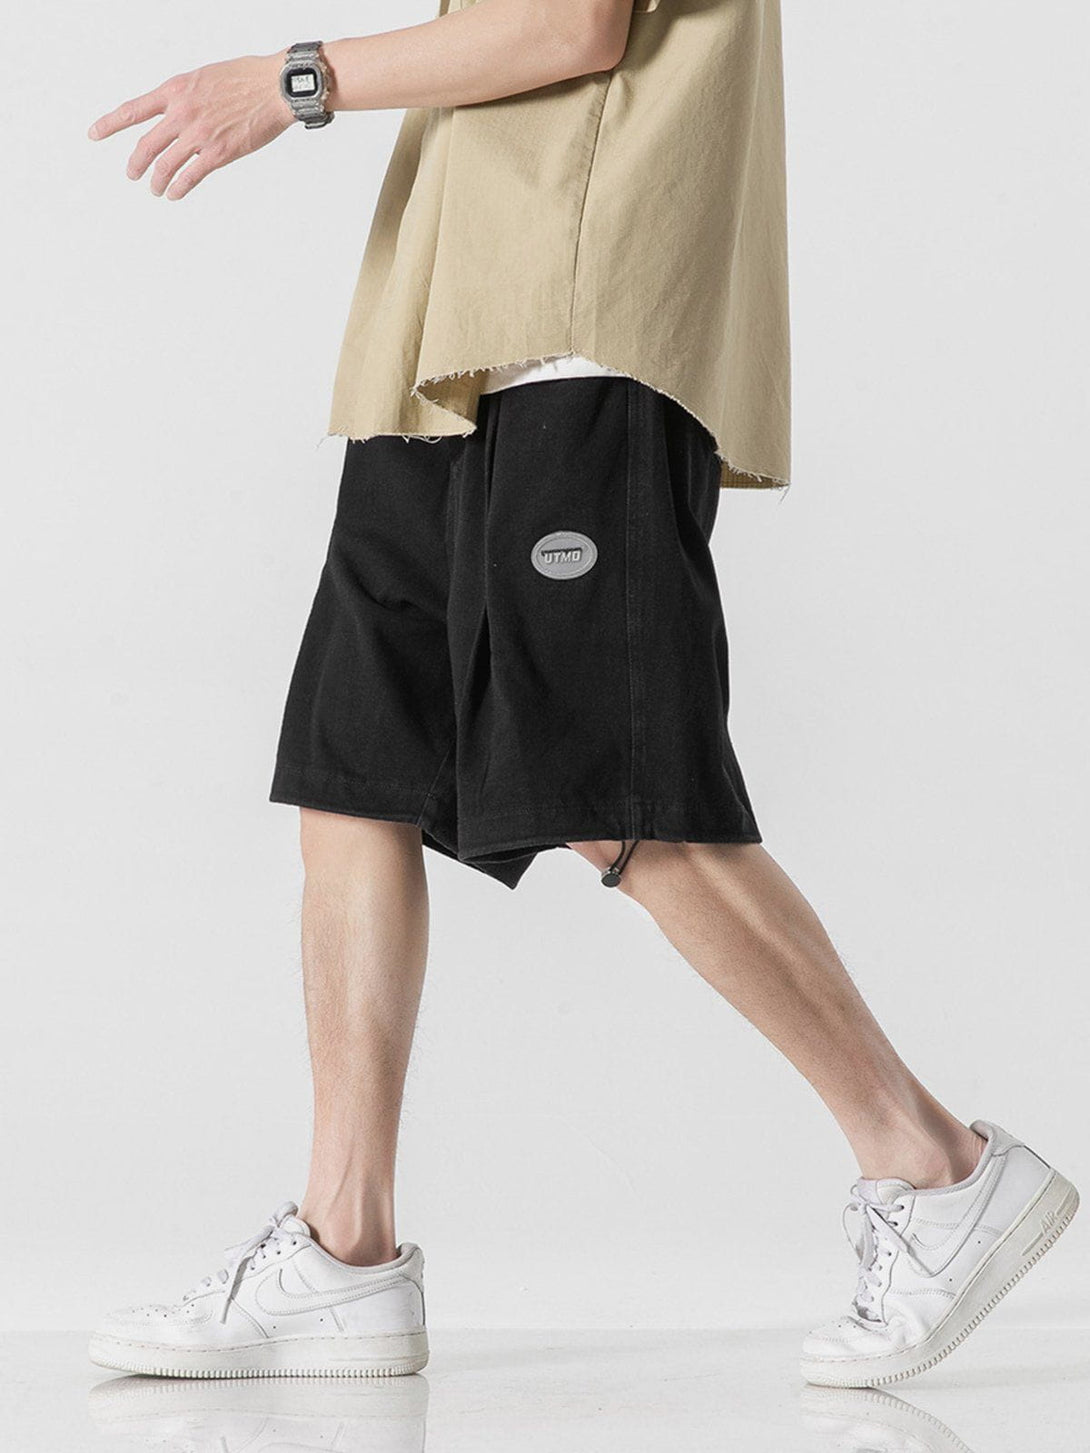 Majesda® - Drawstring Label Shorts outfit ideas streetwear fashion